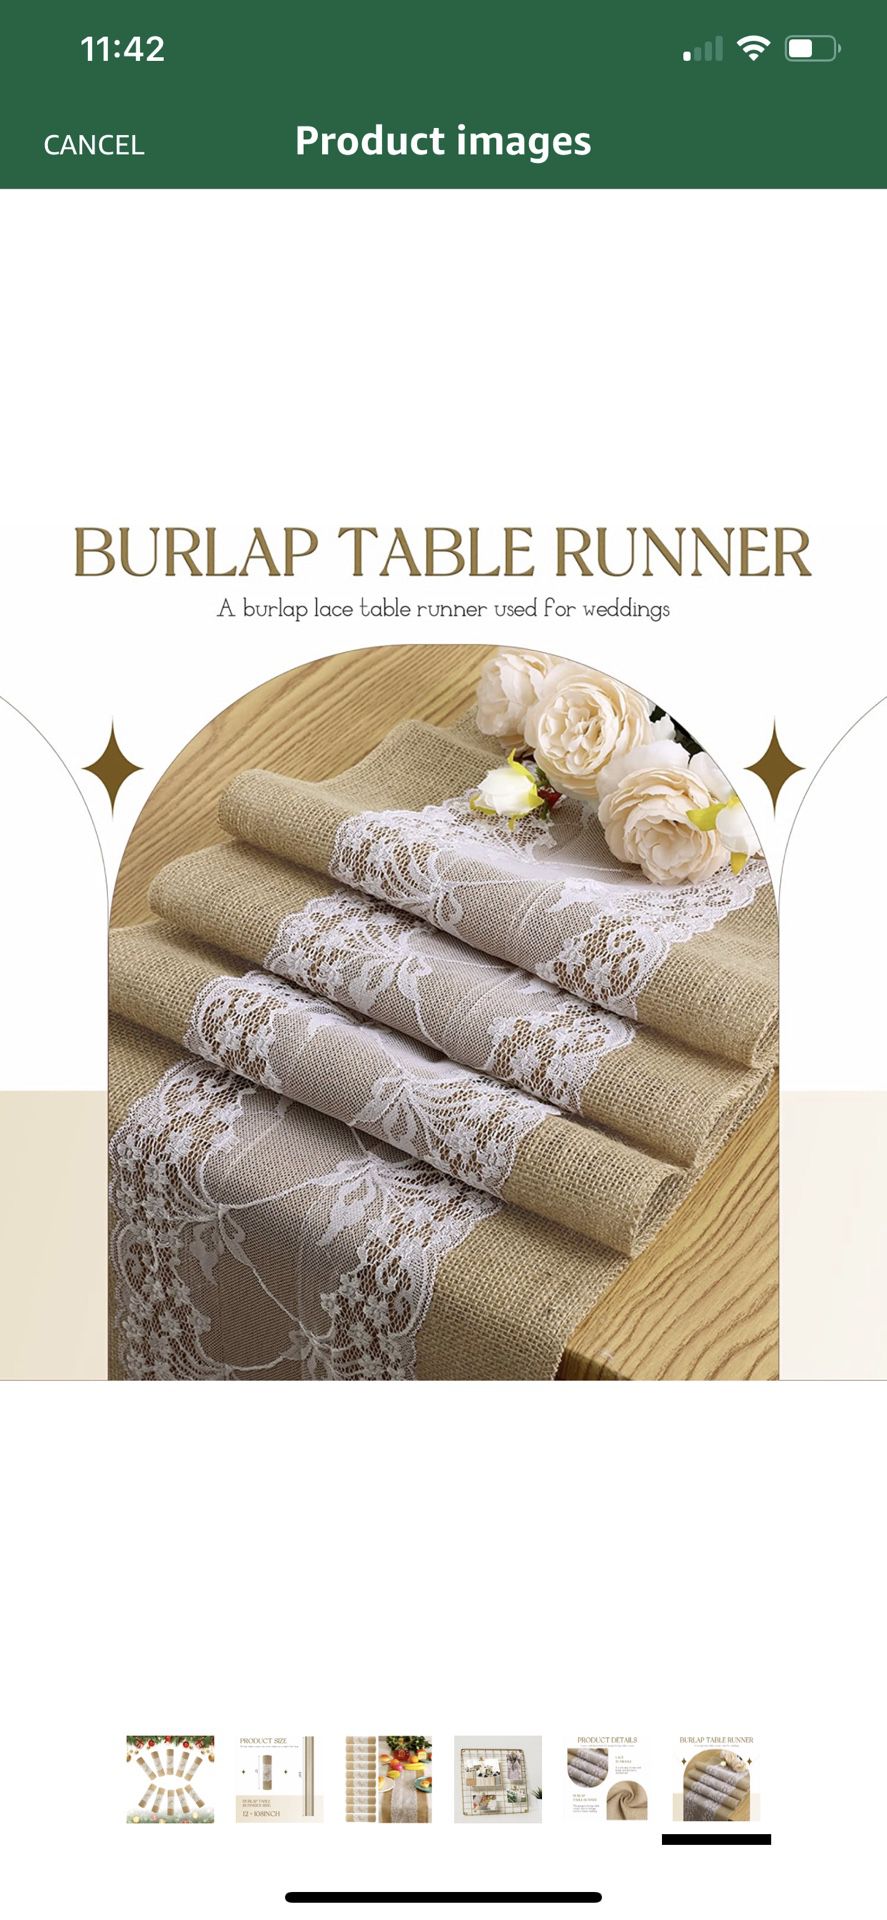 10 Packs boyspringg Burlap Table Runner- Burlap Lace Table Runner 12x108 inches